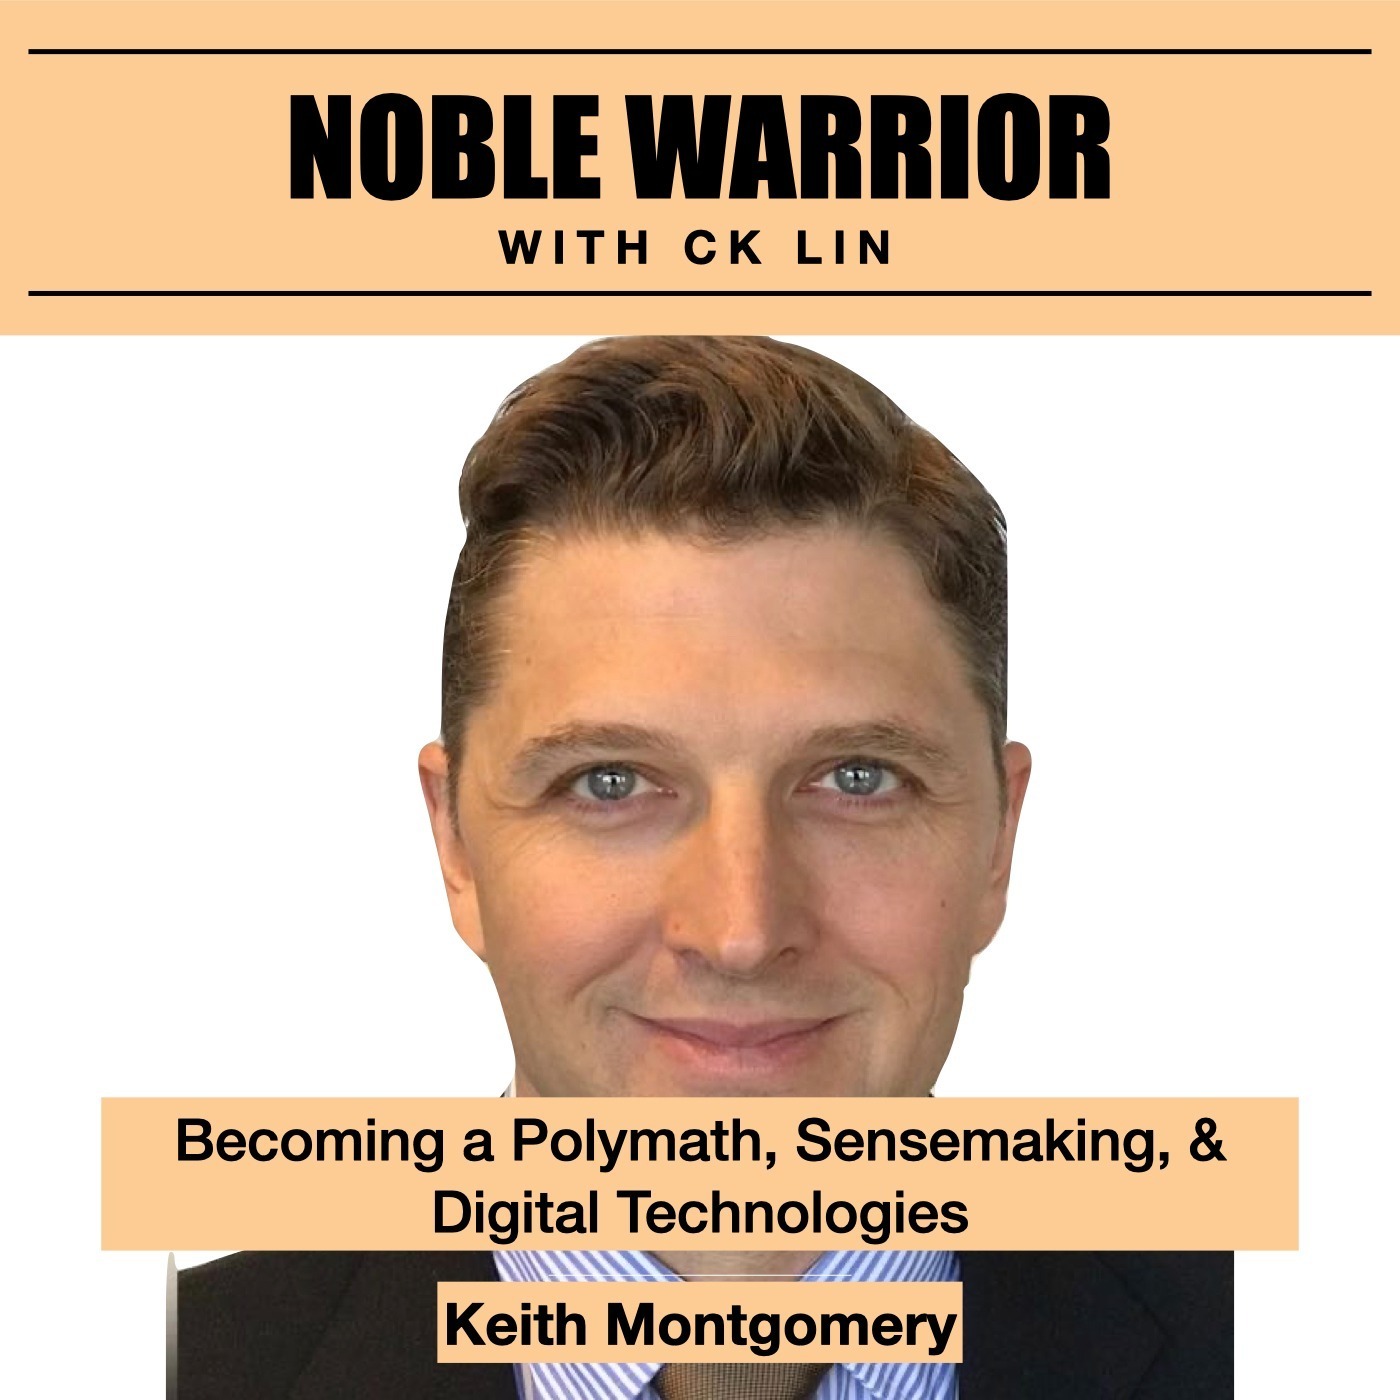 121 Keith Montgomery: Becoming a Polymath, Sensemaking, & Digital Technologies Image